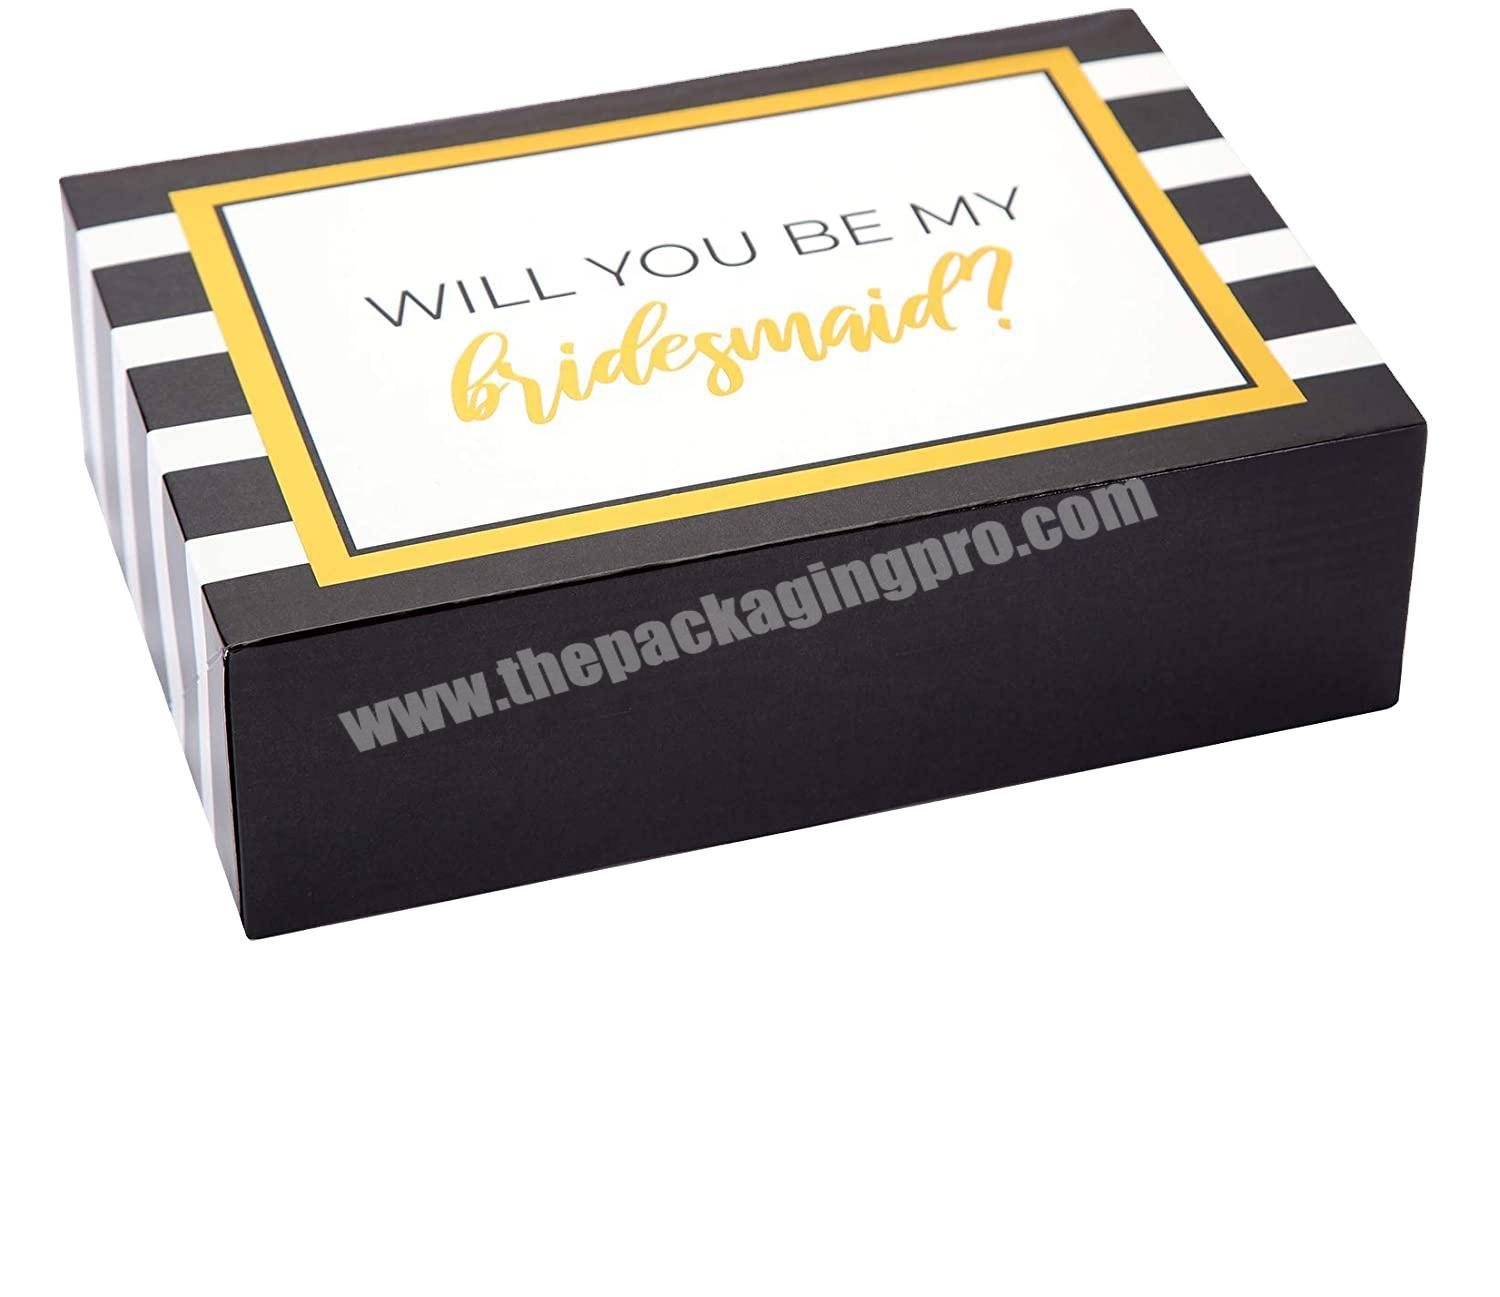 Stripes gold foil bridesmaid proposal gift box personalized custom wedding gift box